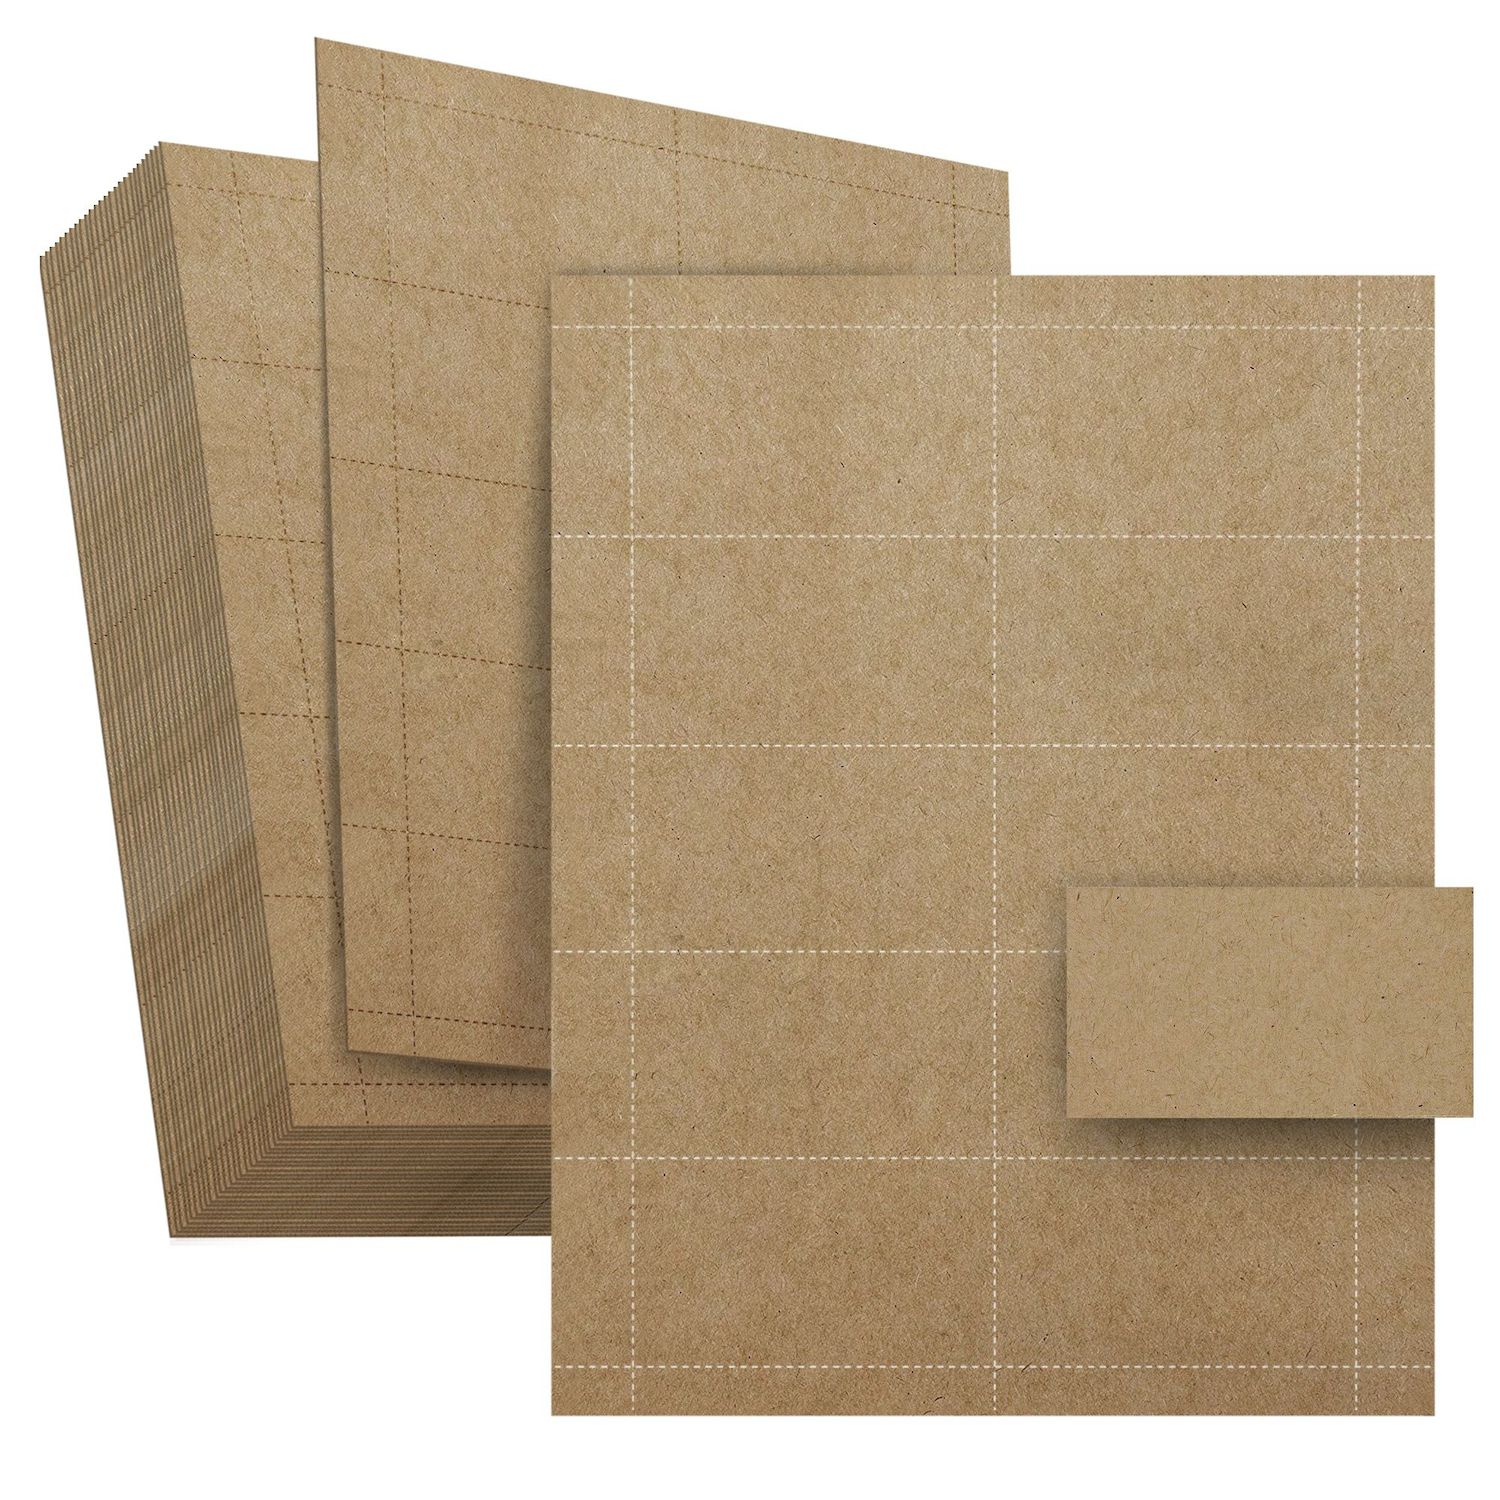 Juvale 200 Pack Corrugated Cardboard Divider Sheets, 4x6 Flat